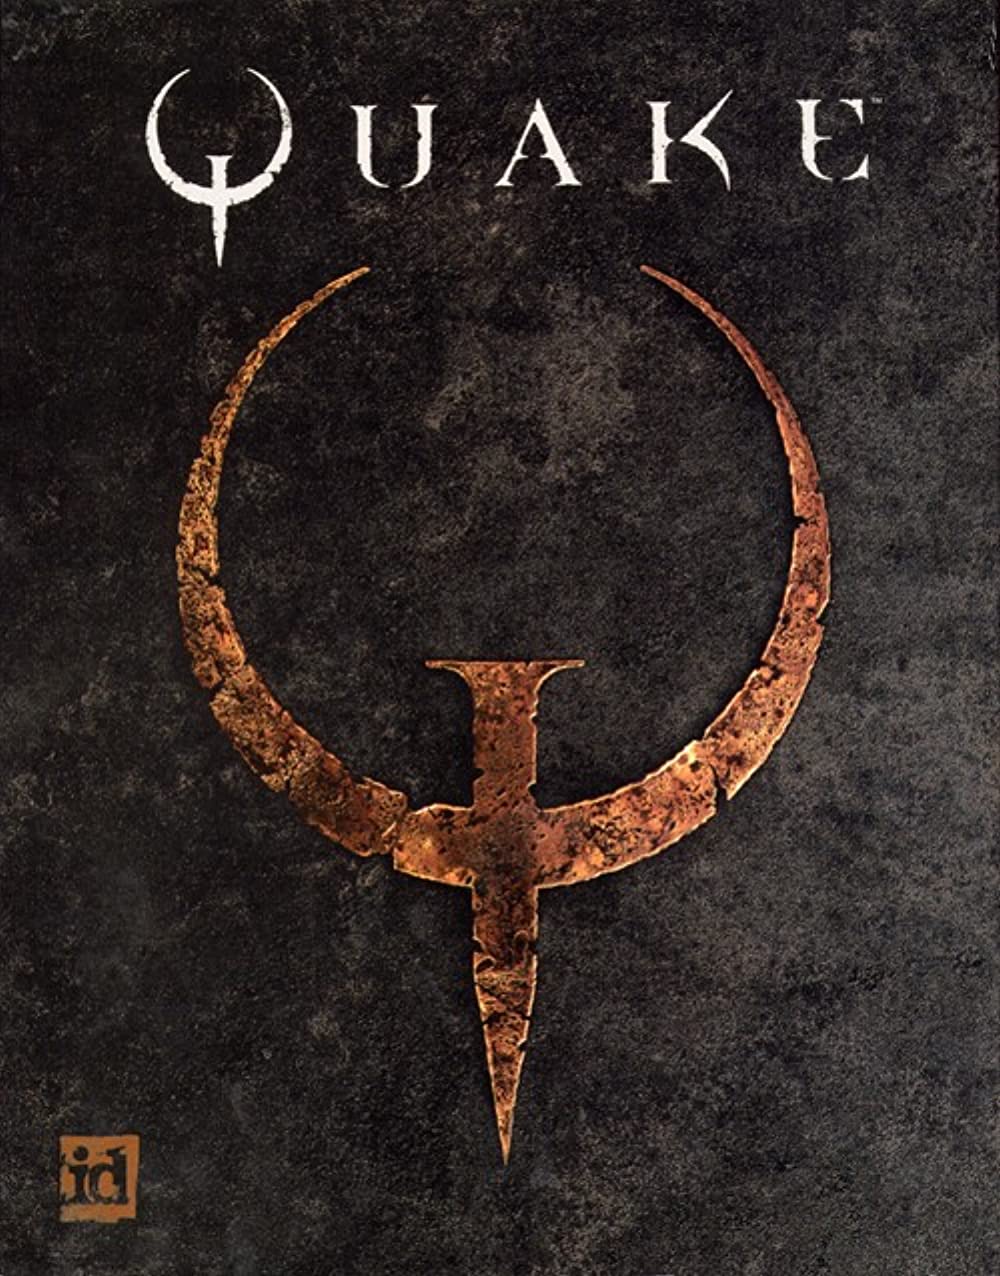 Quake berusia 25 tahun: John Romero melihat kembali FPS legendaris yang hampir merobek id Software